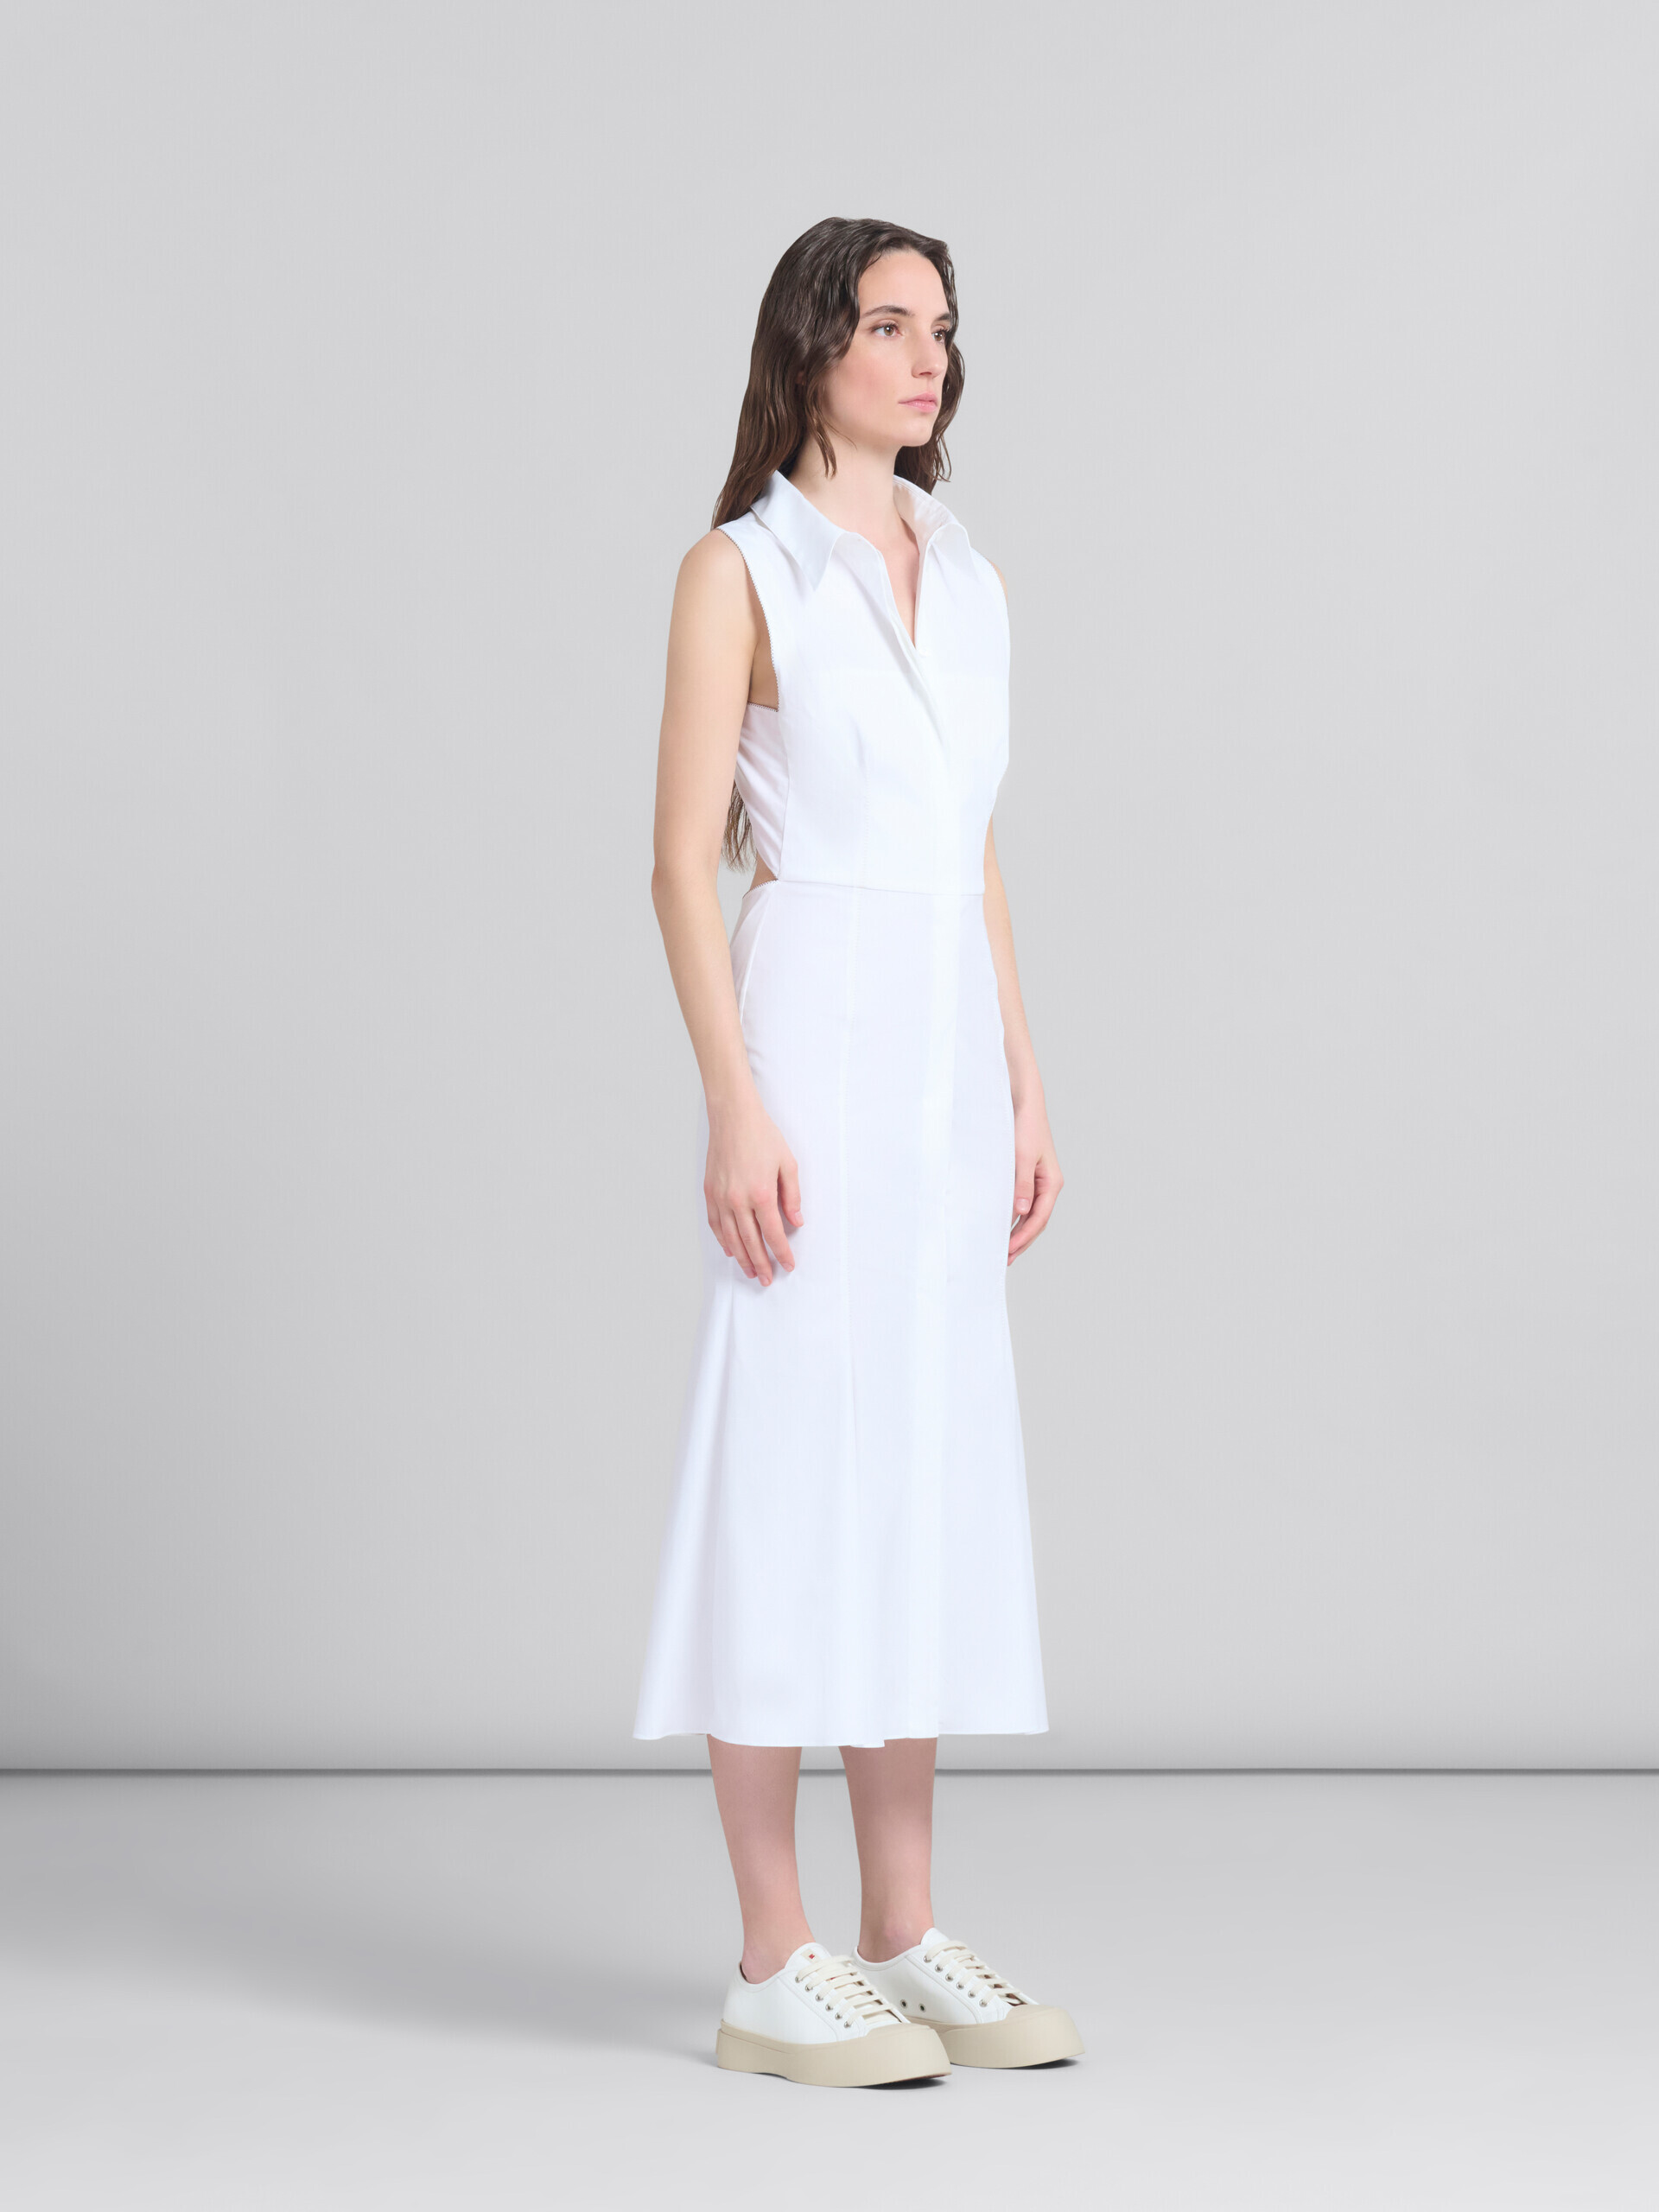 Robe sirène en coton organique blanc - Robes - Image 6